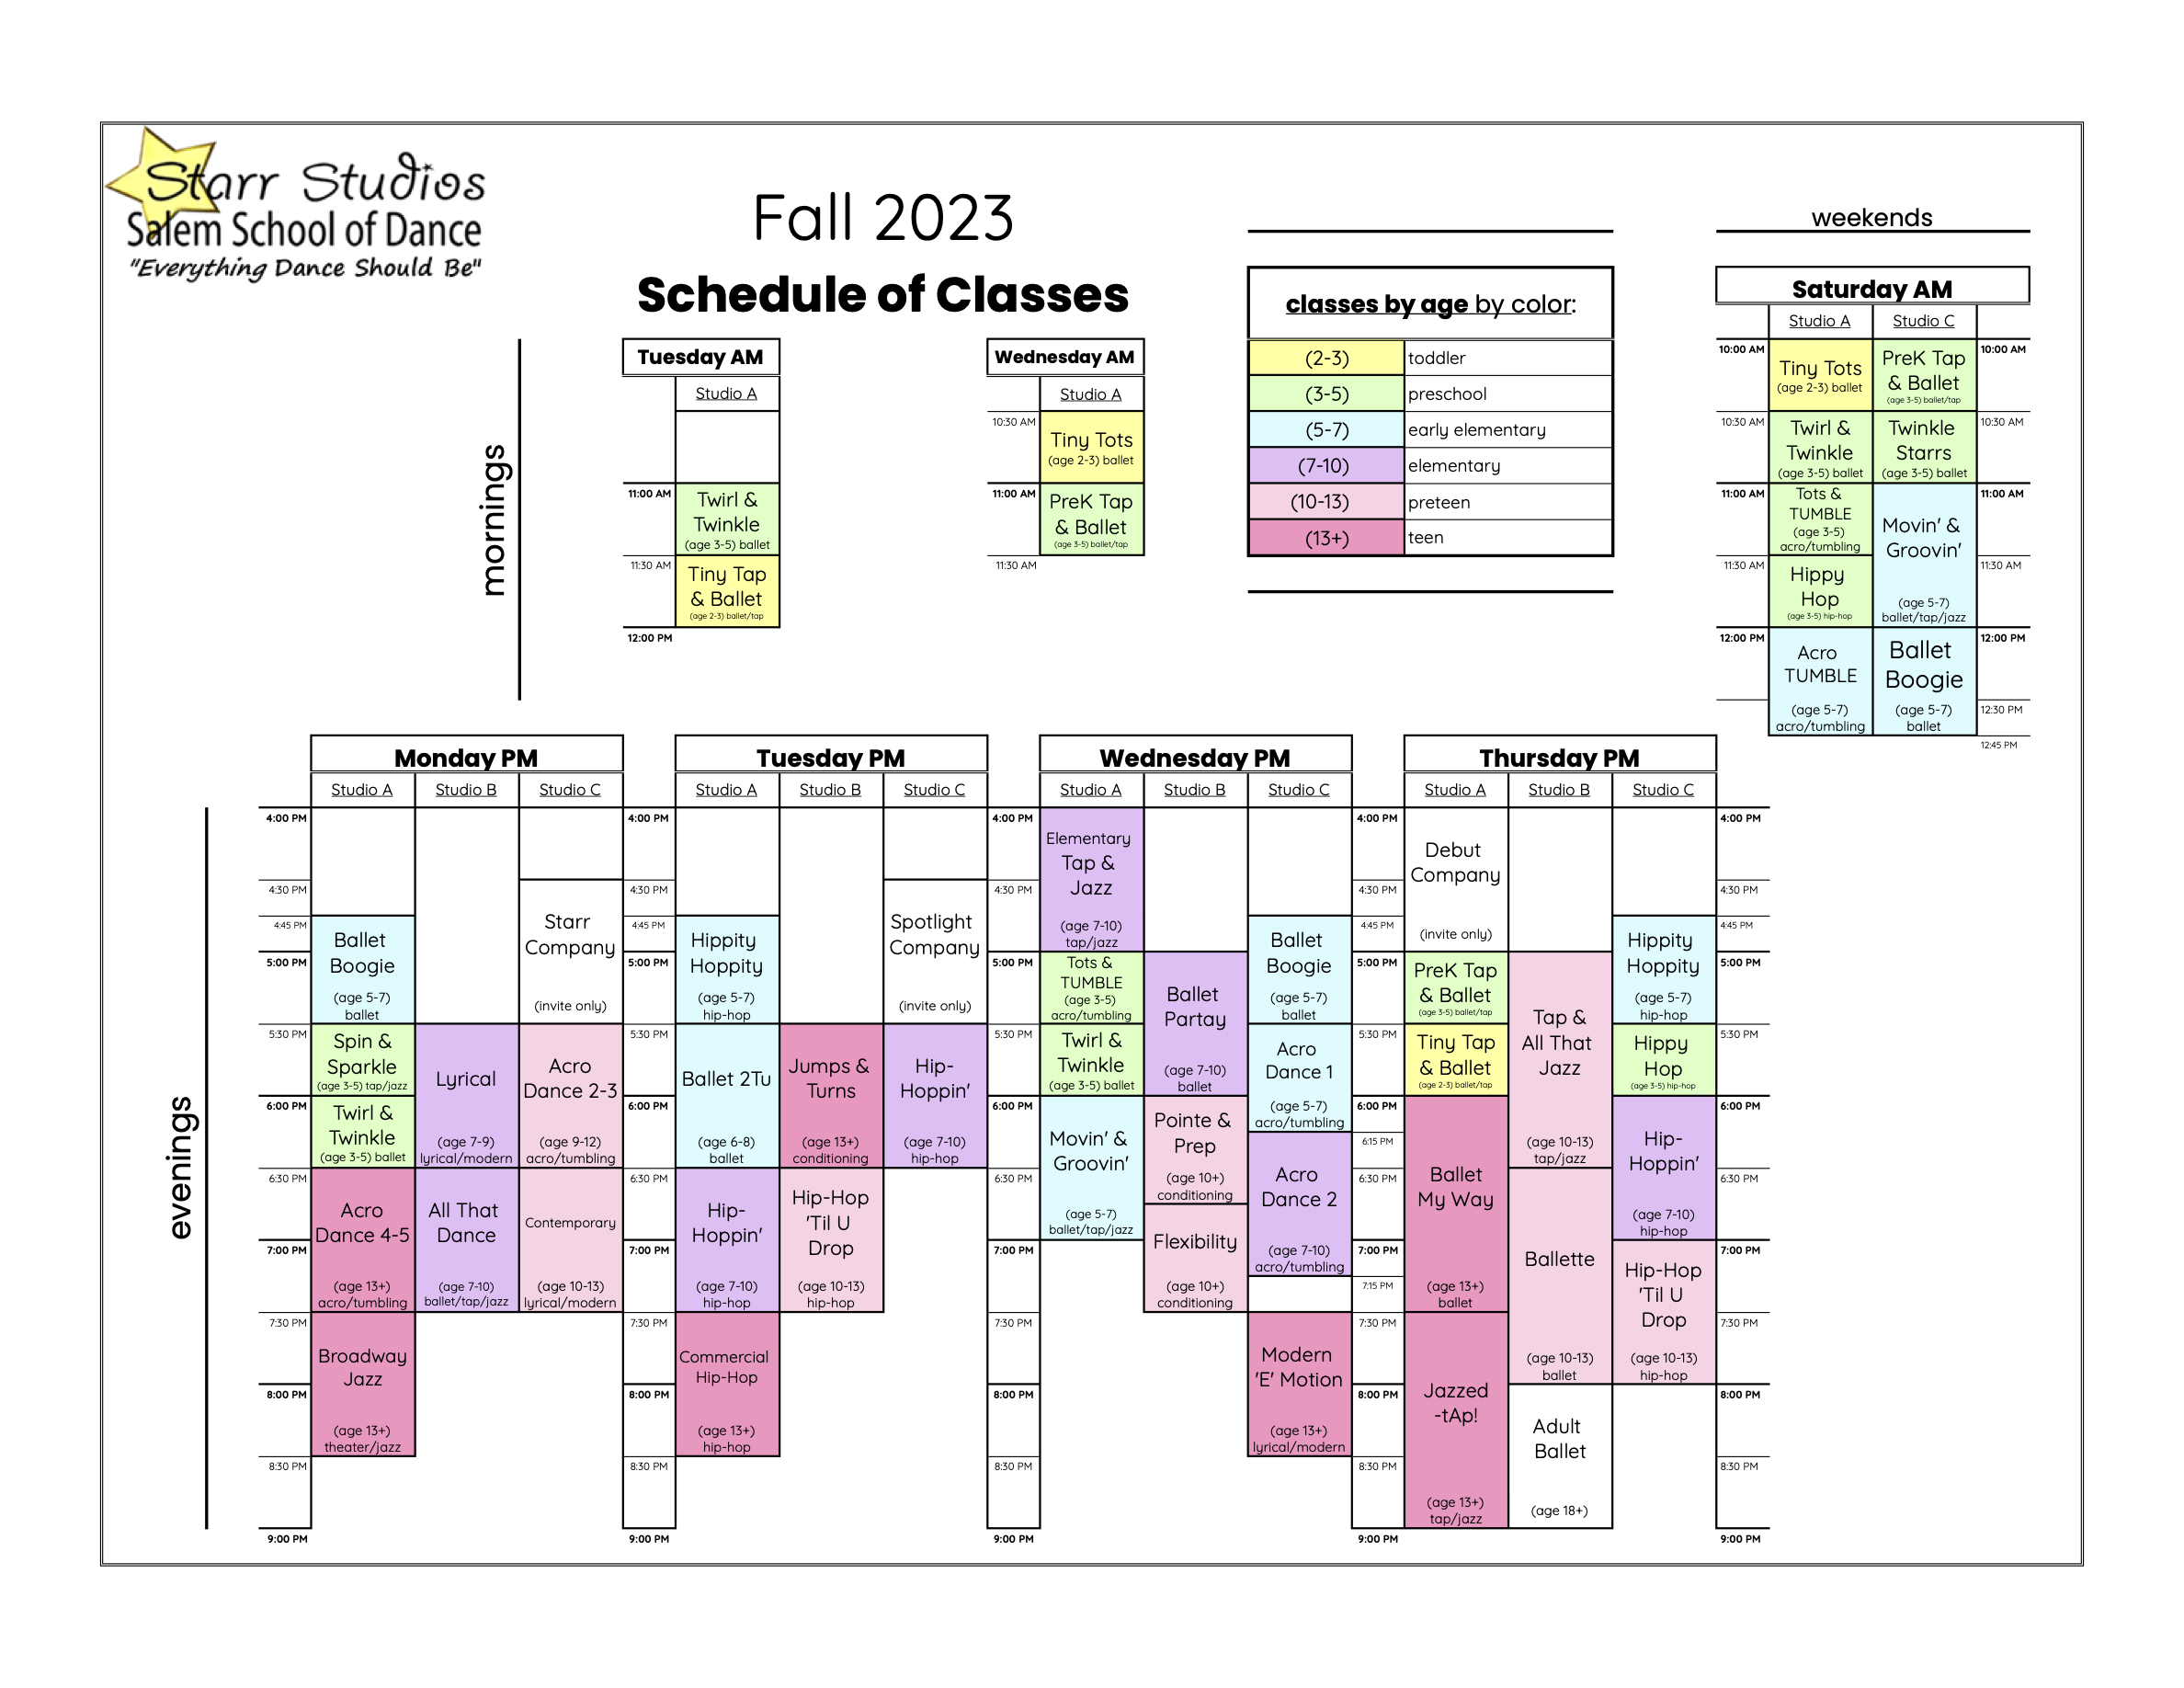 Starr Studios Fall 2023 class schedule